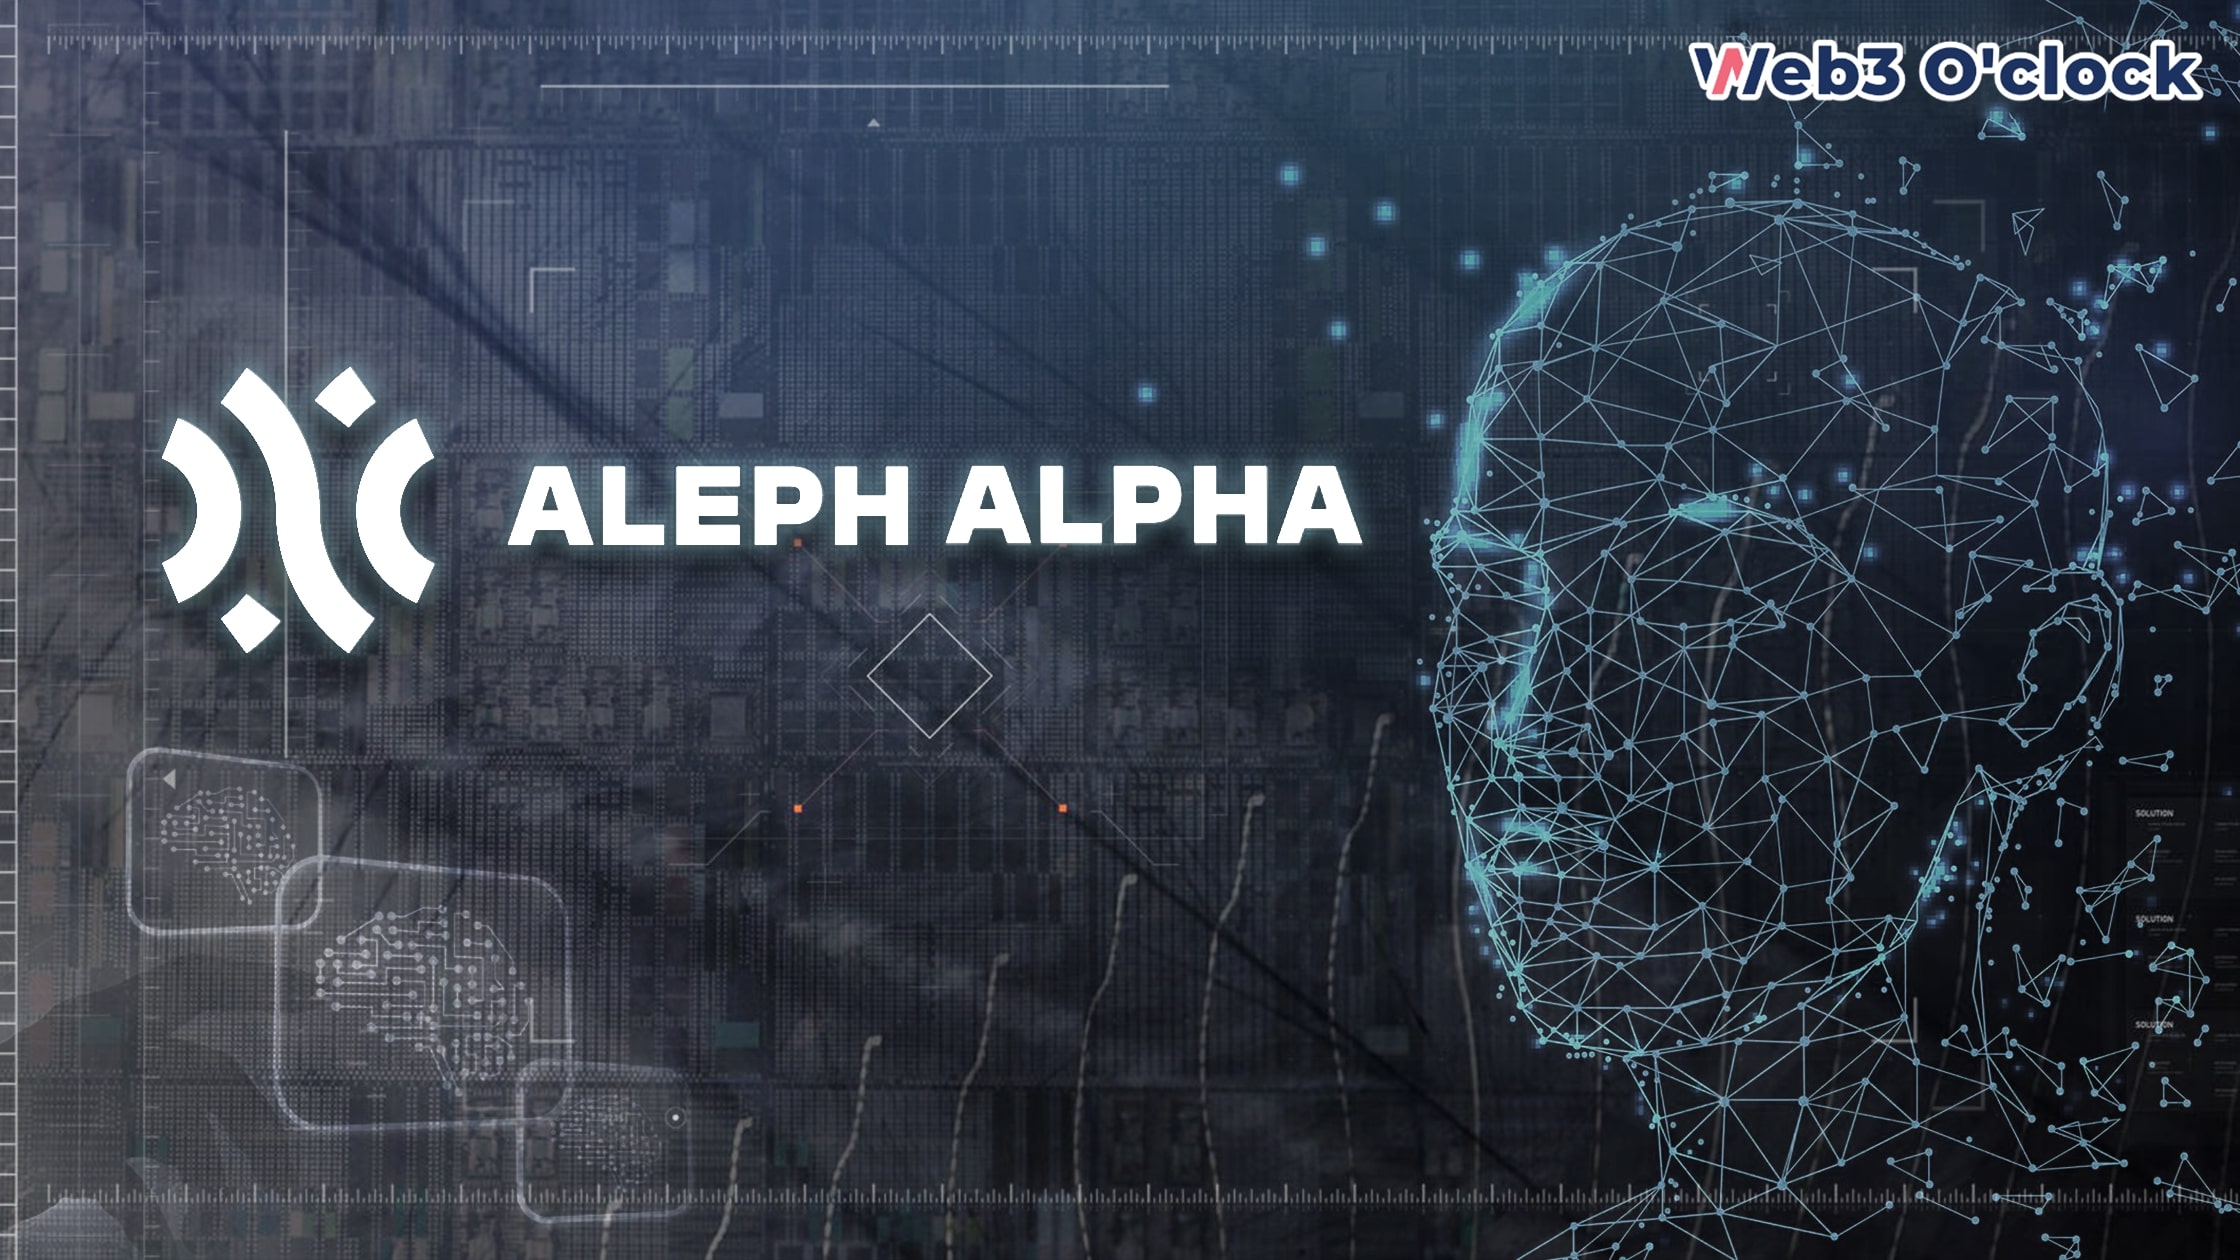 Aleph Alpha Raises $500M in Series B Funding by Web3 O'clock